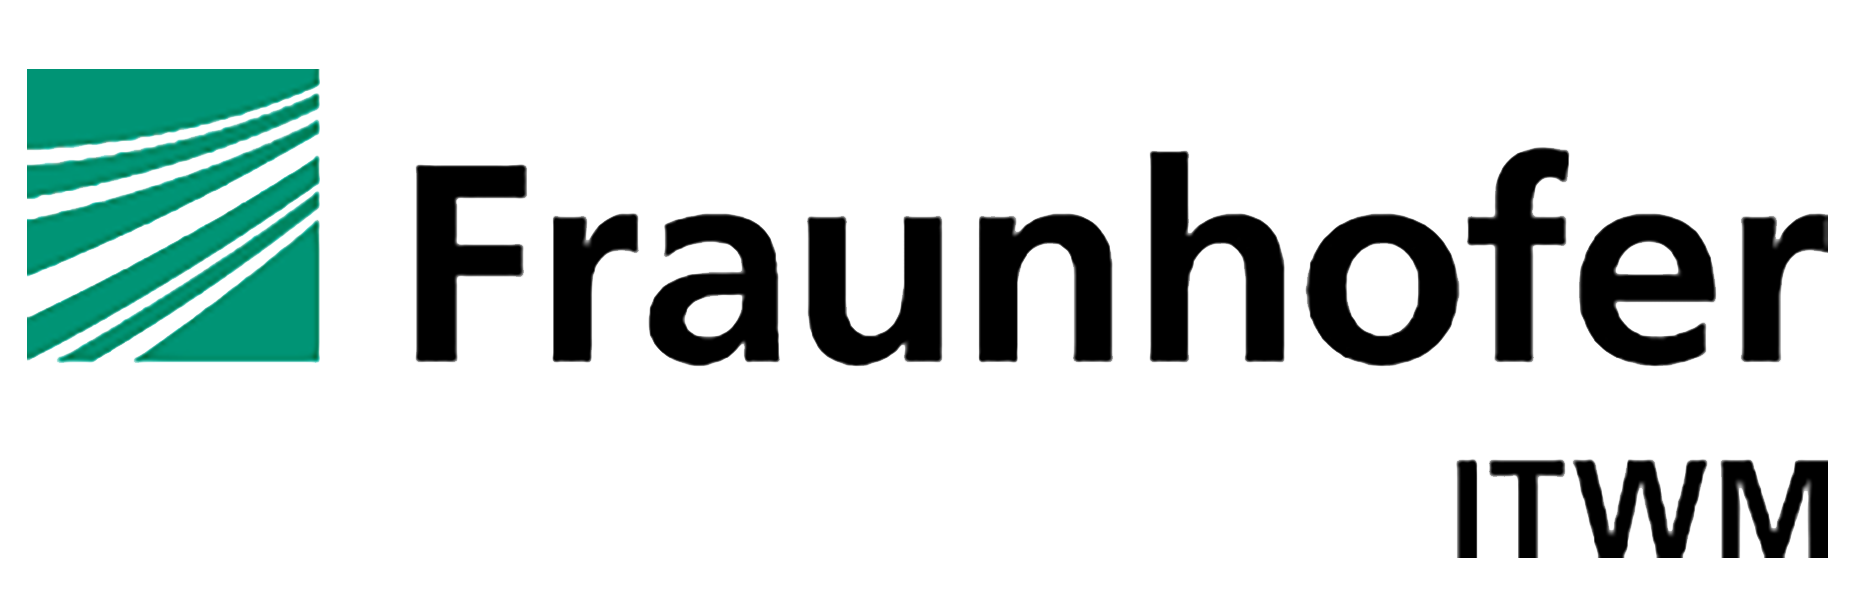 Fraunhofer ITWM als Konsortialpartner des Bauhaus.Mobilit7yLabs